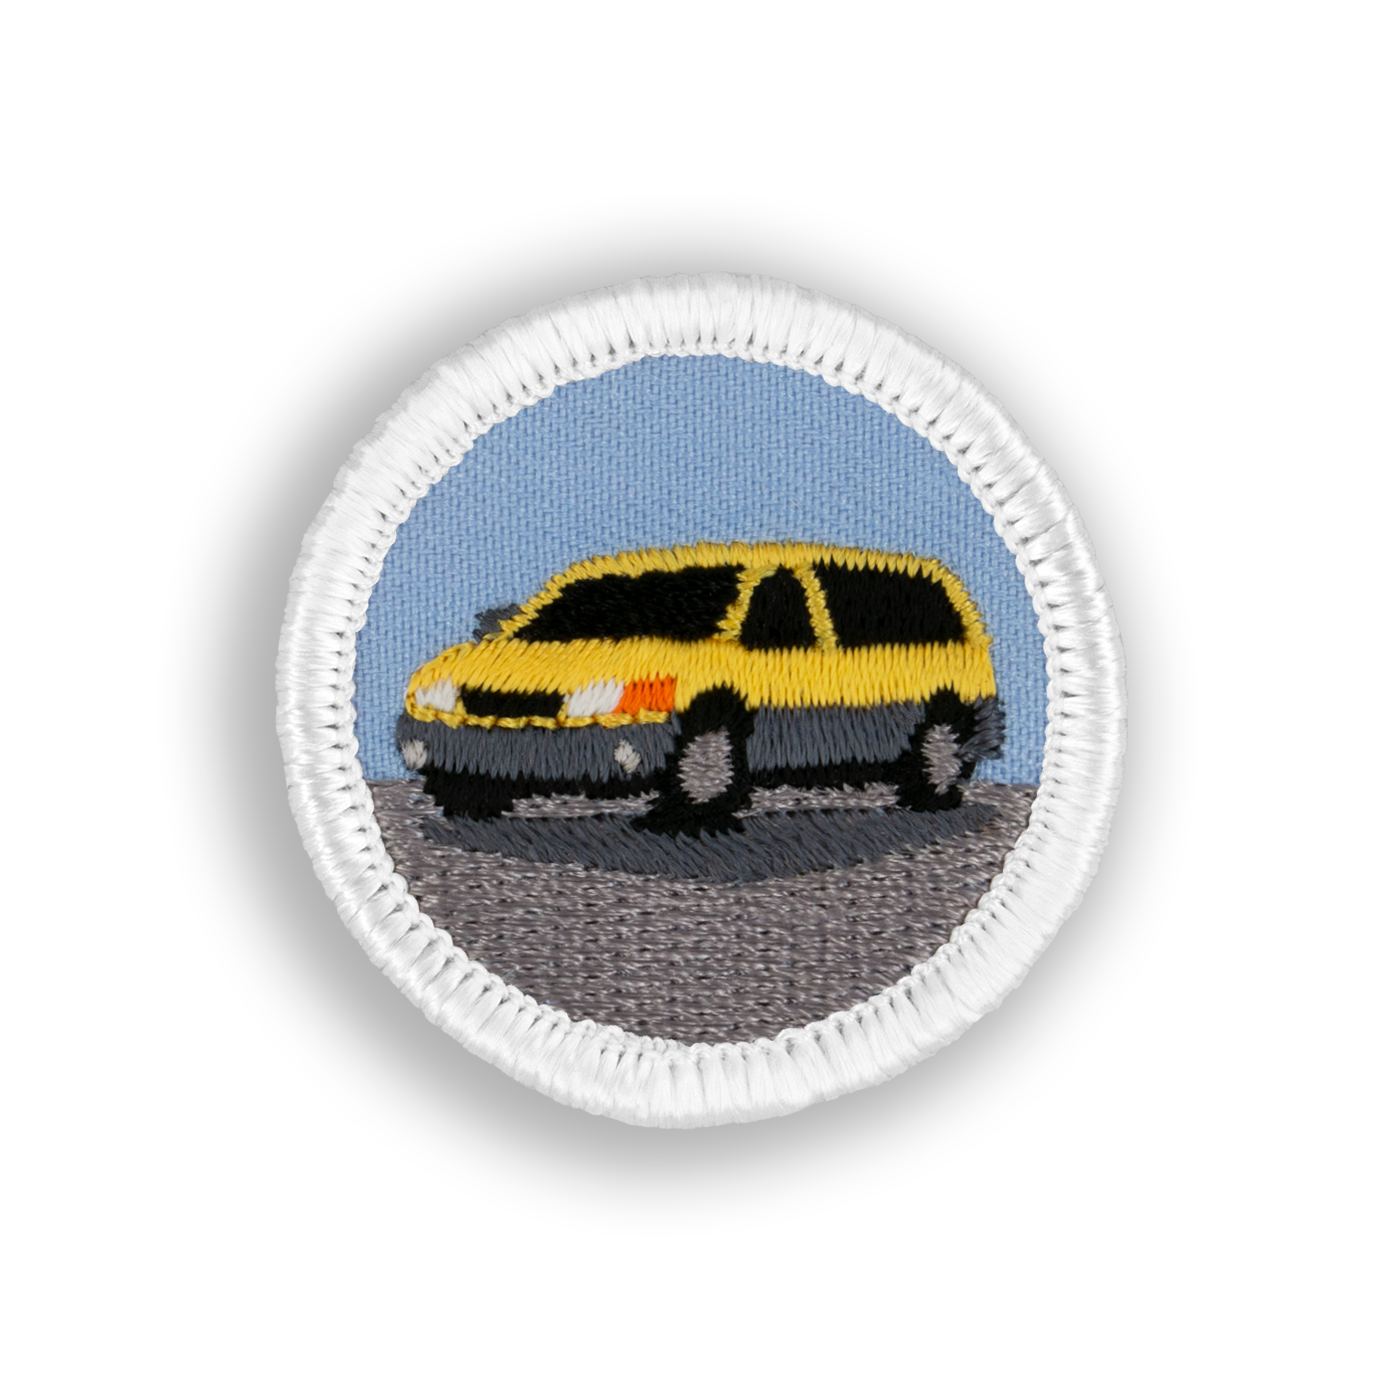 Minivan Patch | Demerit Wear - Fake Merit Badges